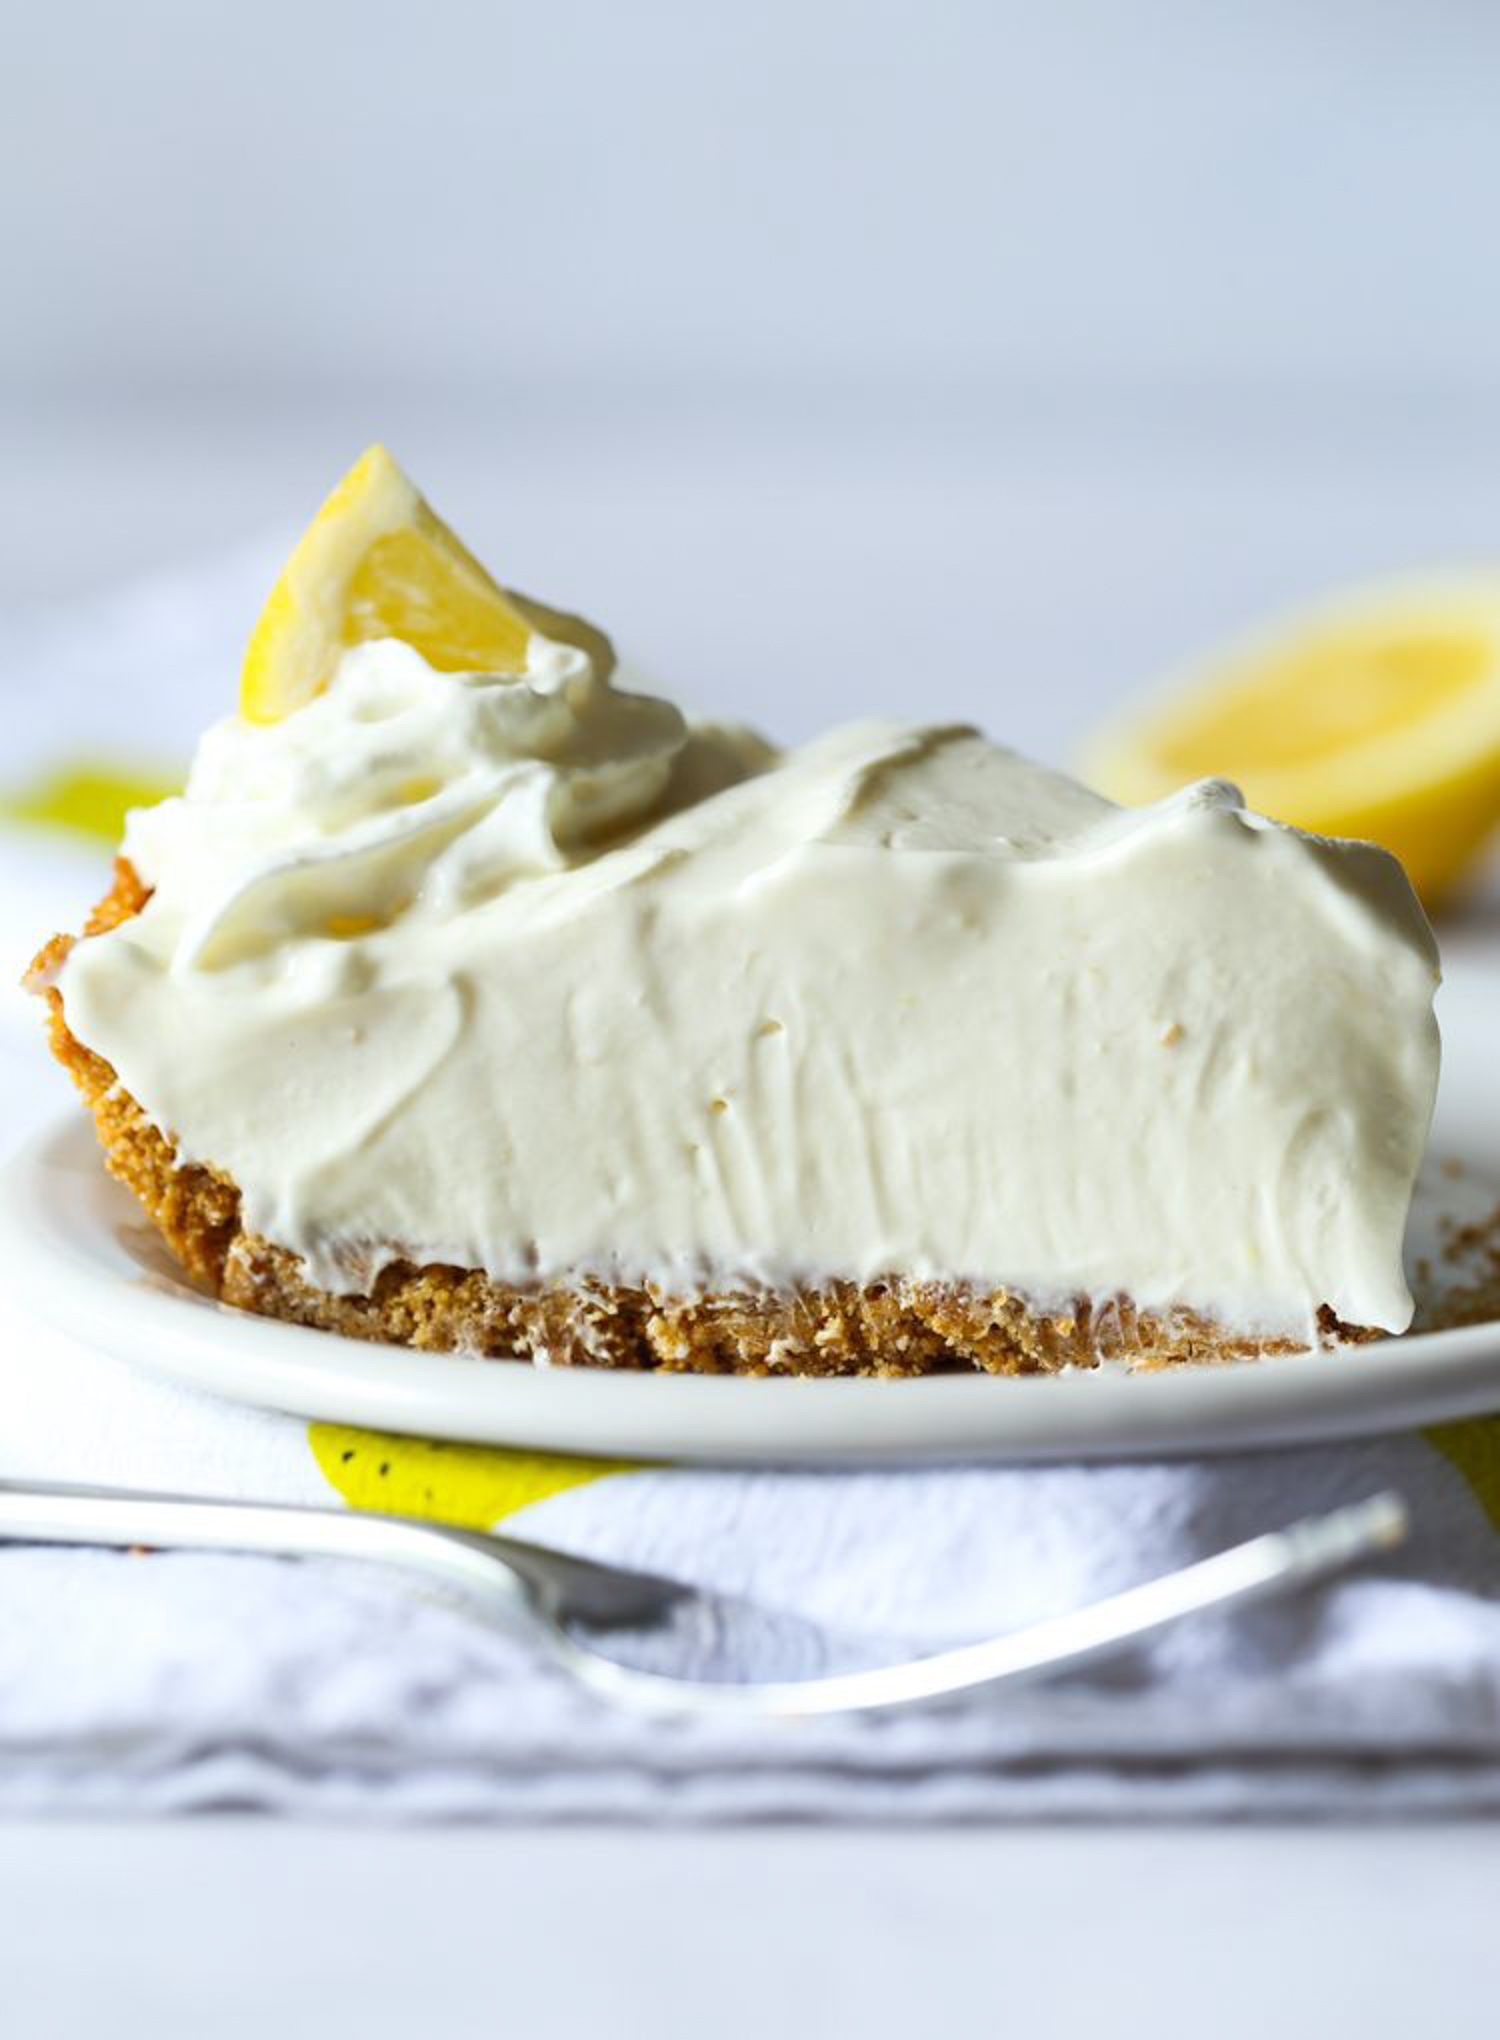 Lemonade Pie served with a lemon on top